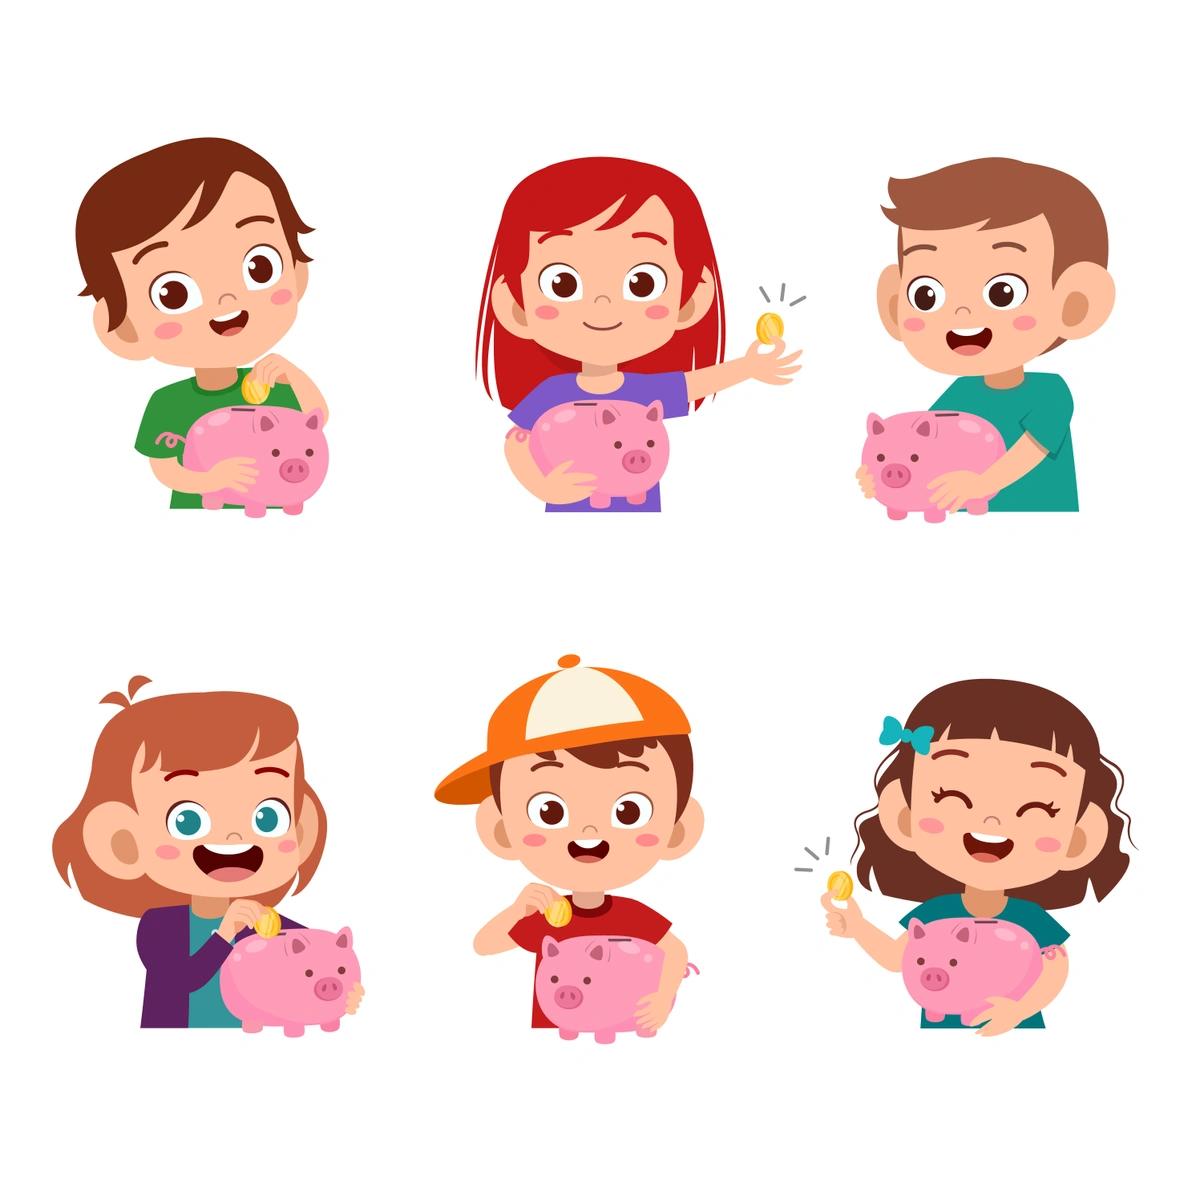 Illustration of six kids holding piggy banks